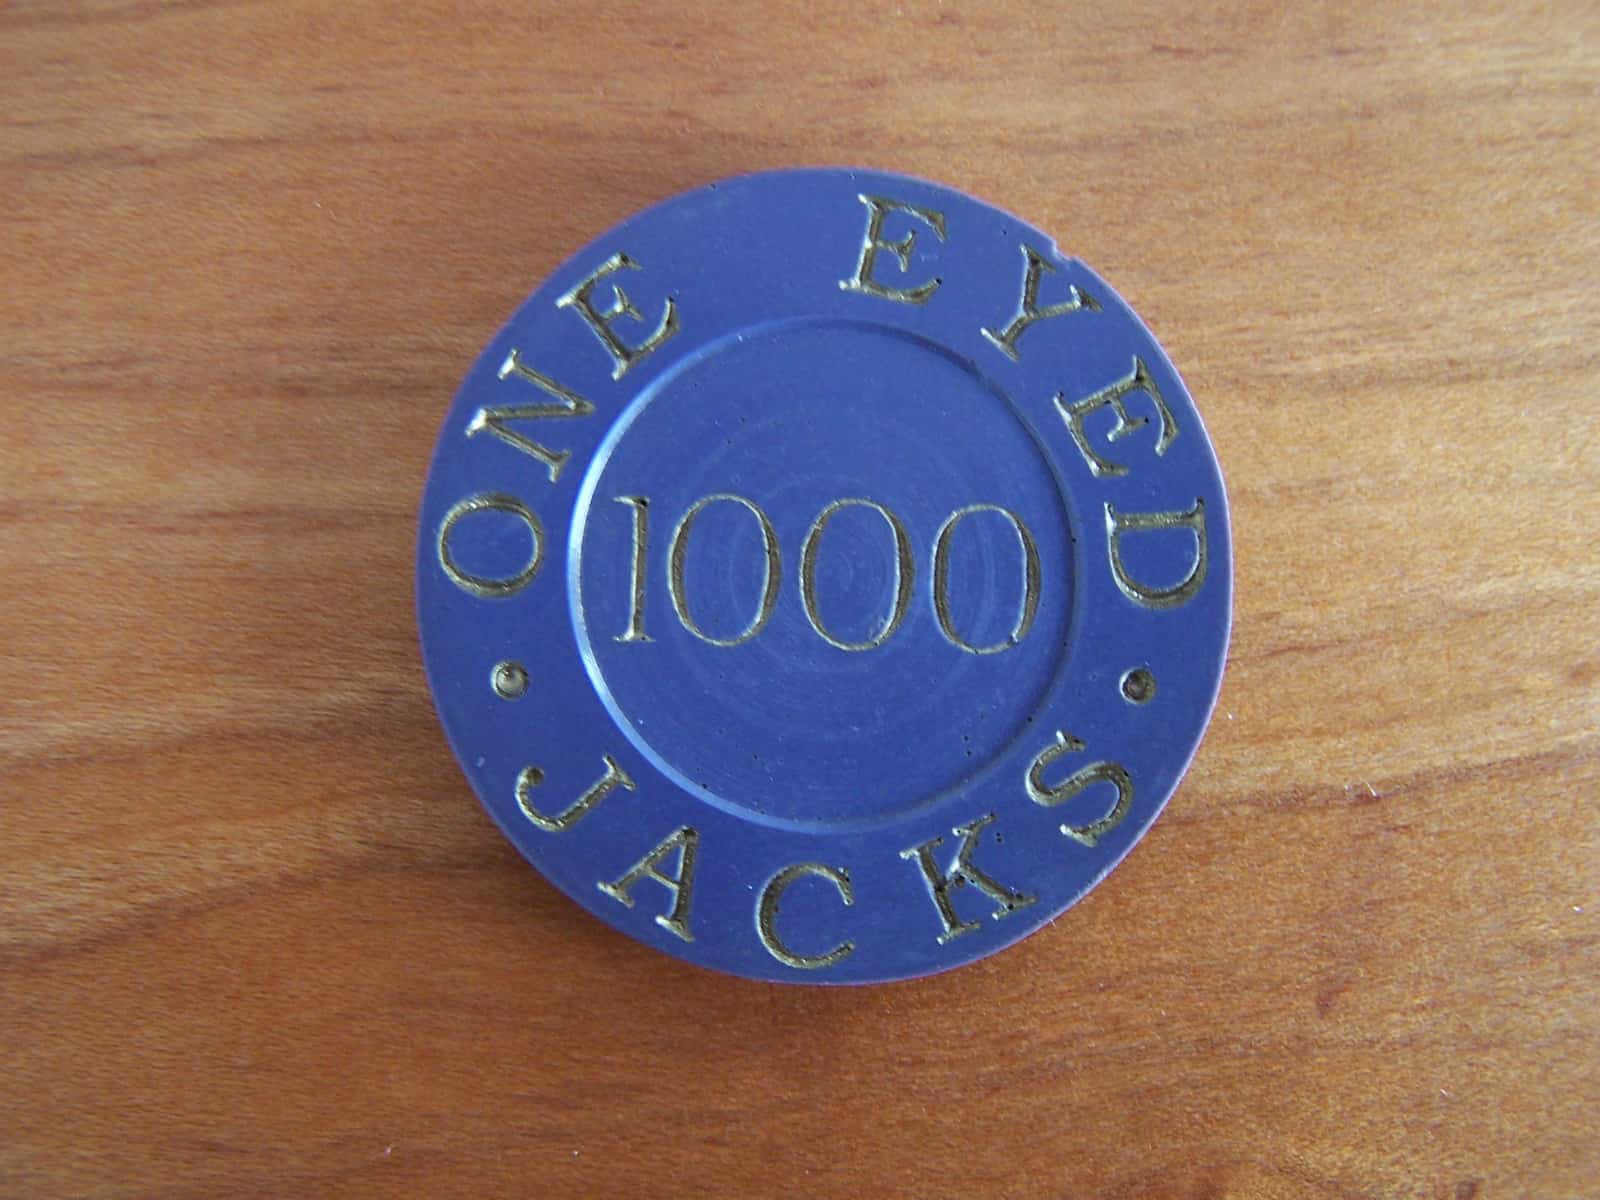 Rare One Eyed Jacks Poker Chip For Sale